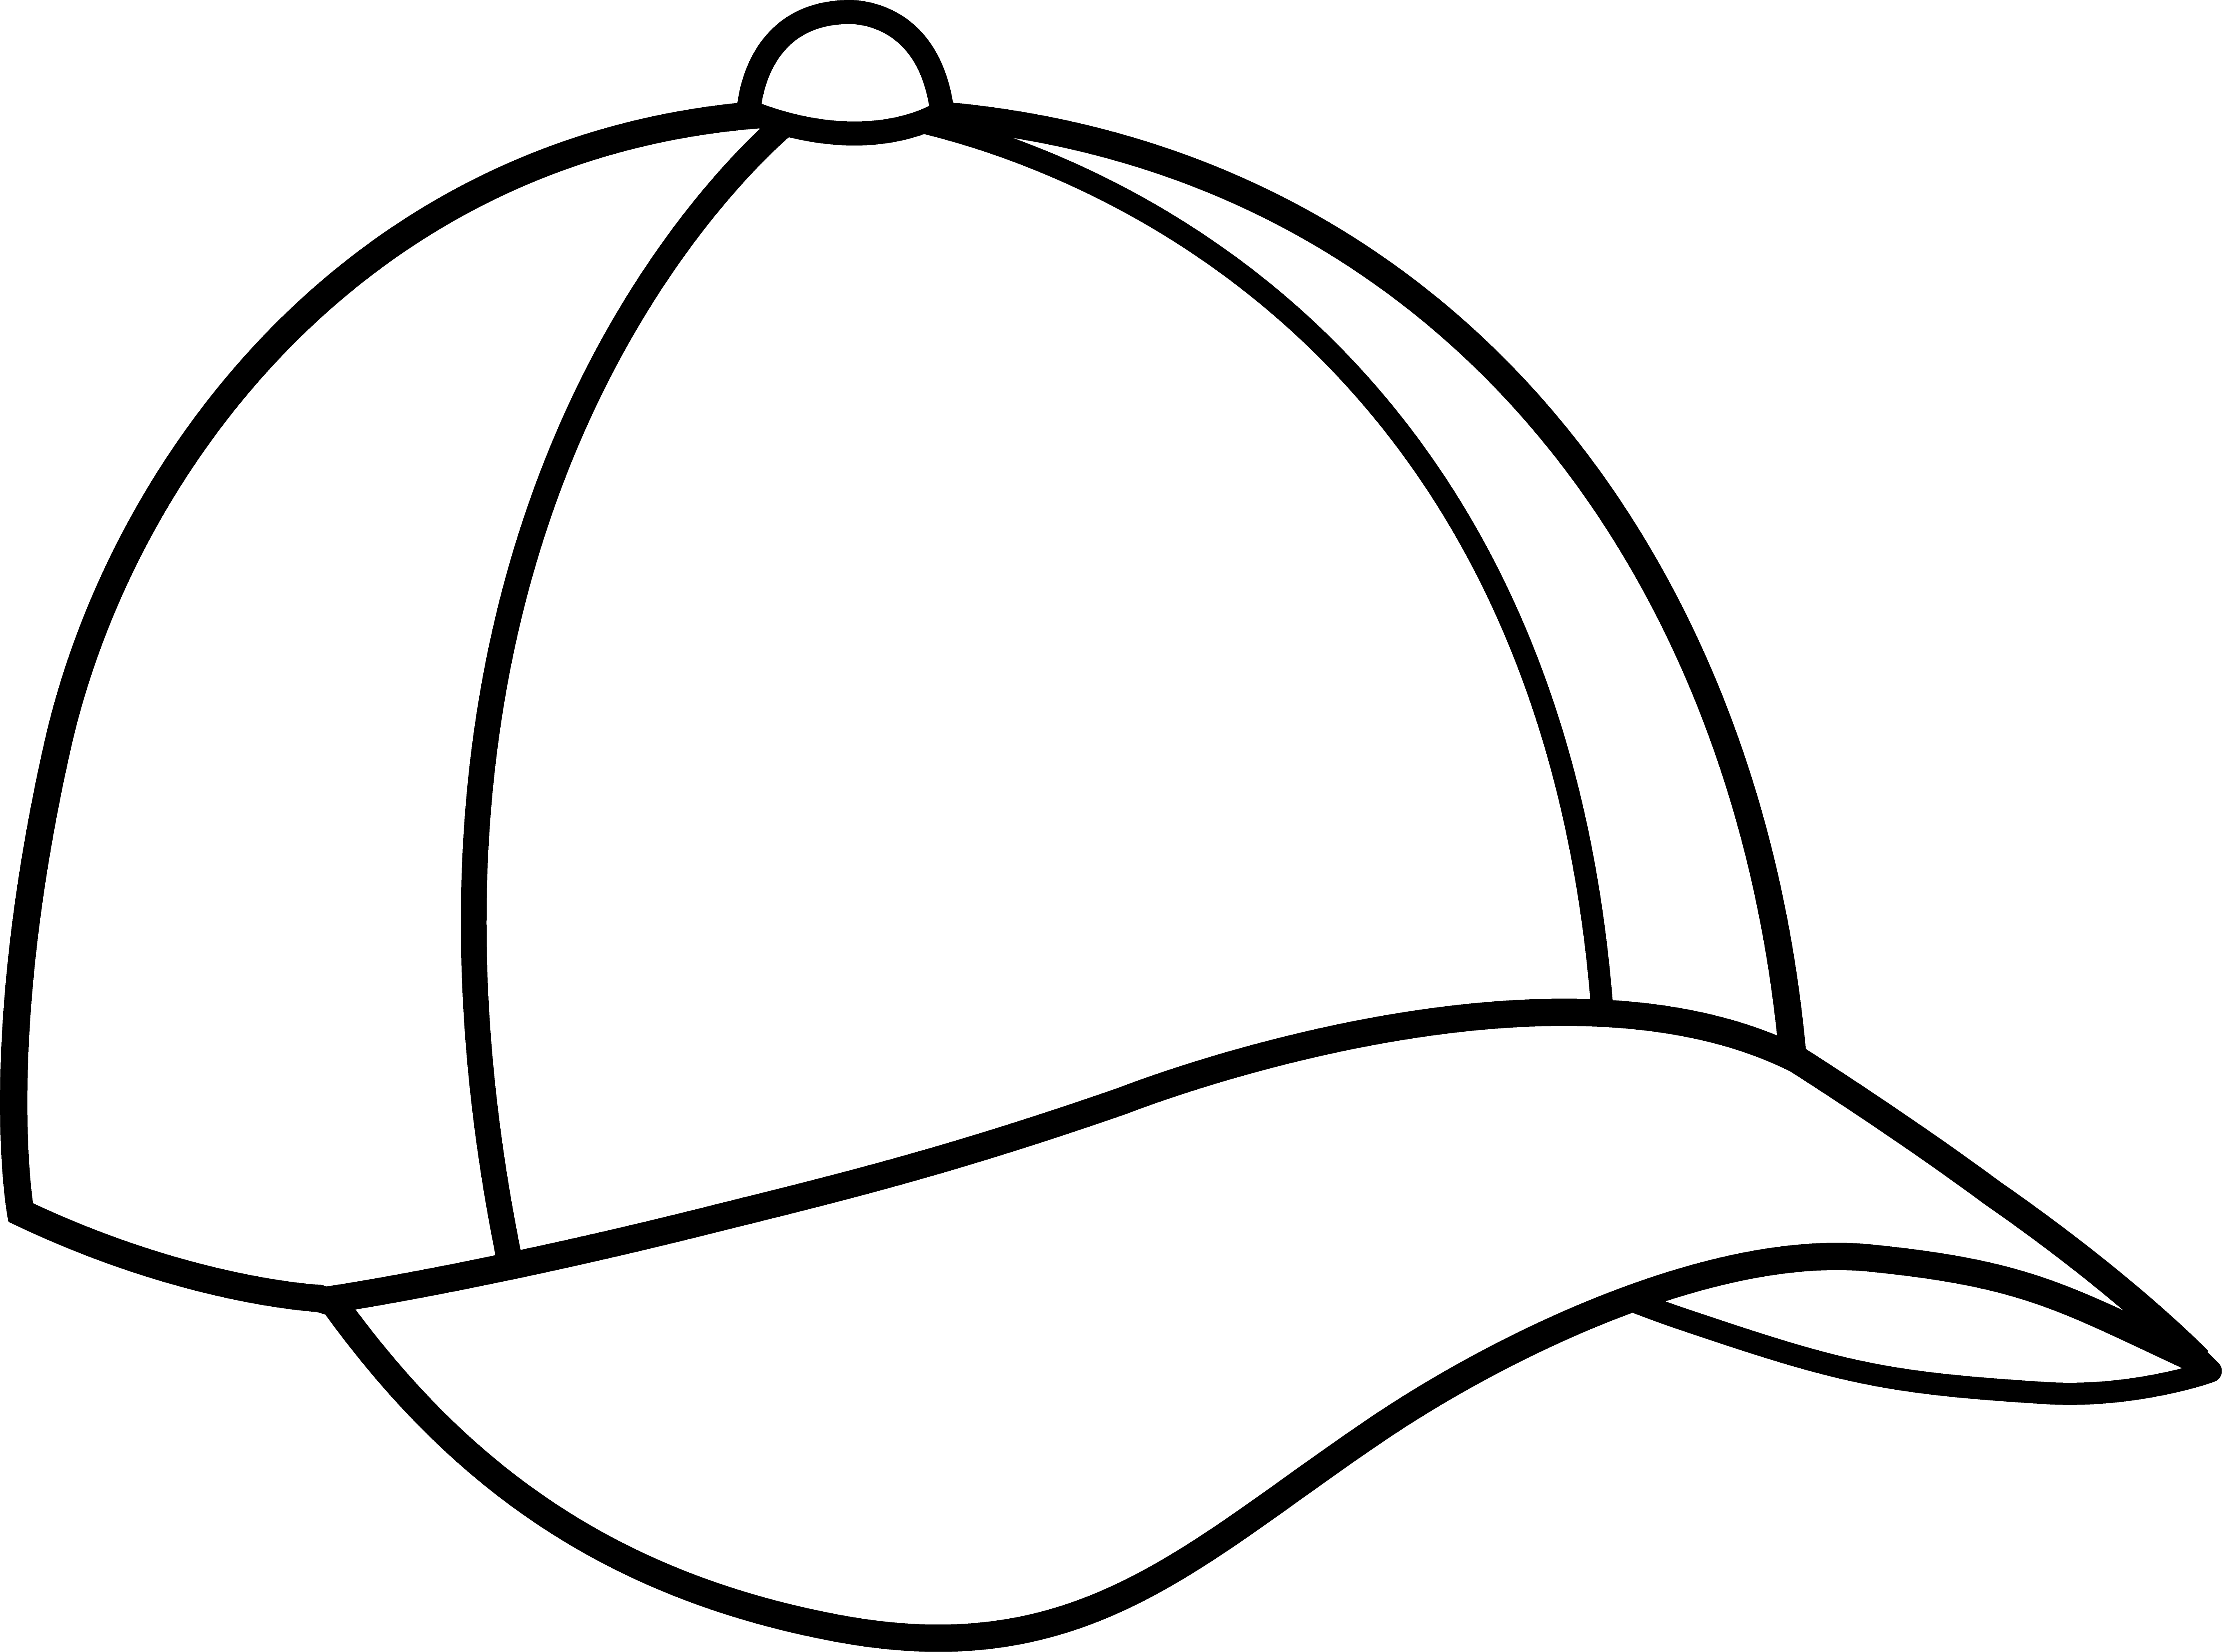 Baseball Cap Design Template | Baseball Cap Line Art - Free Clip ...